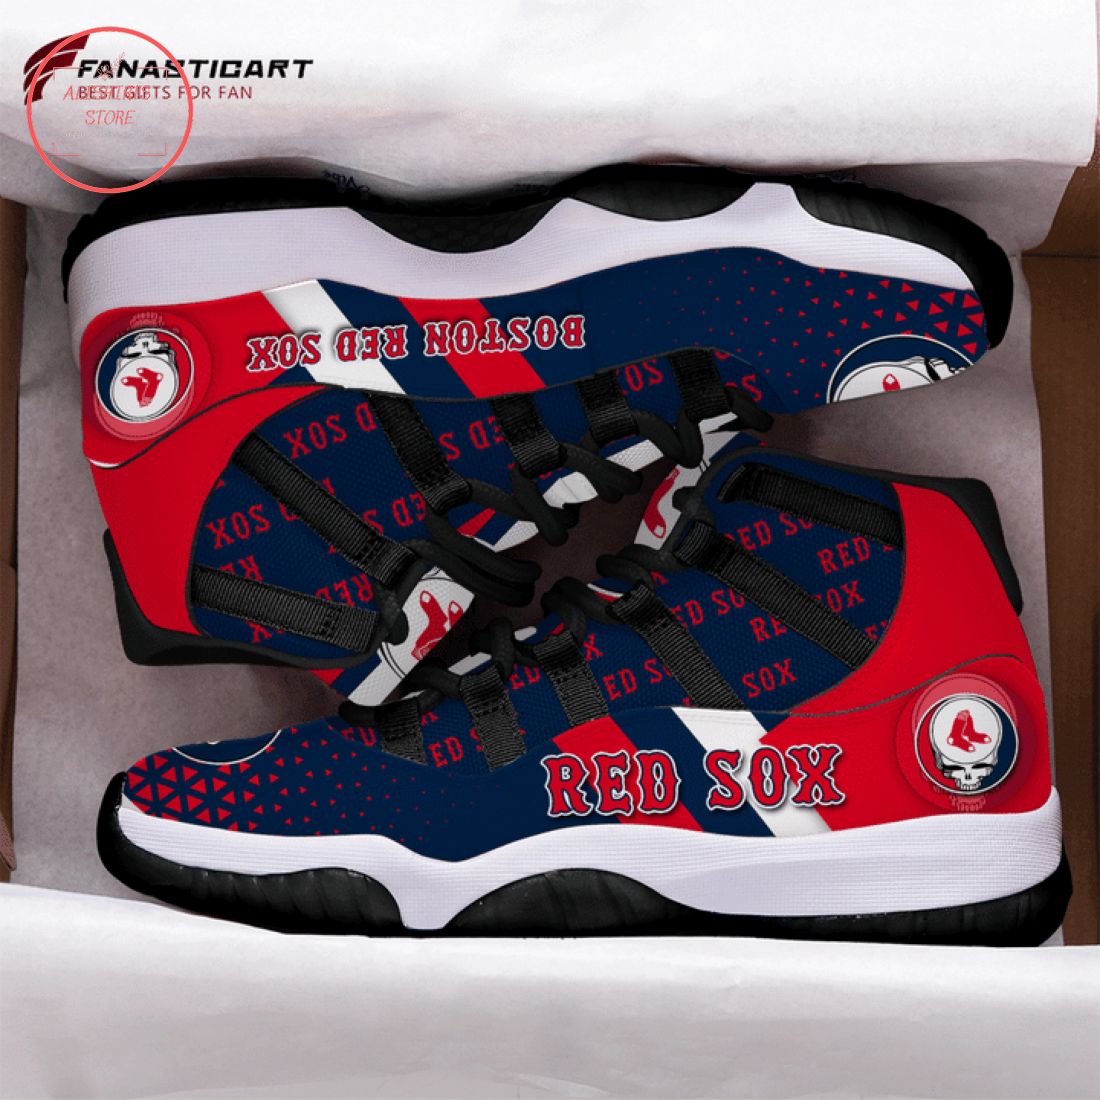 MLB Boston Red Sox Air Jordan 11 Sneaker Shoes